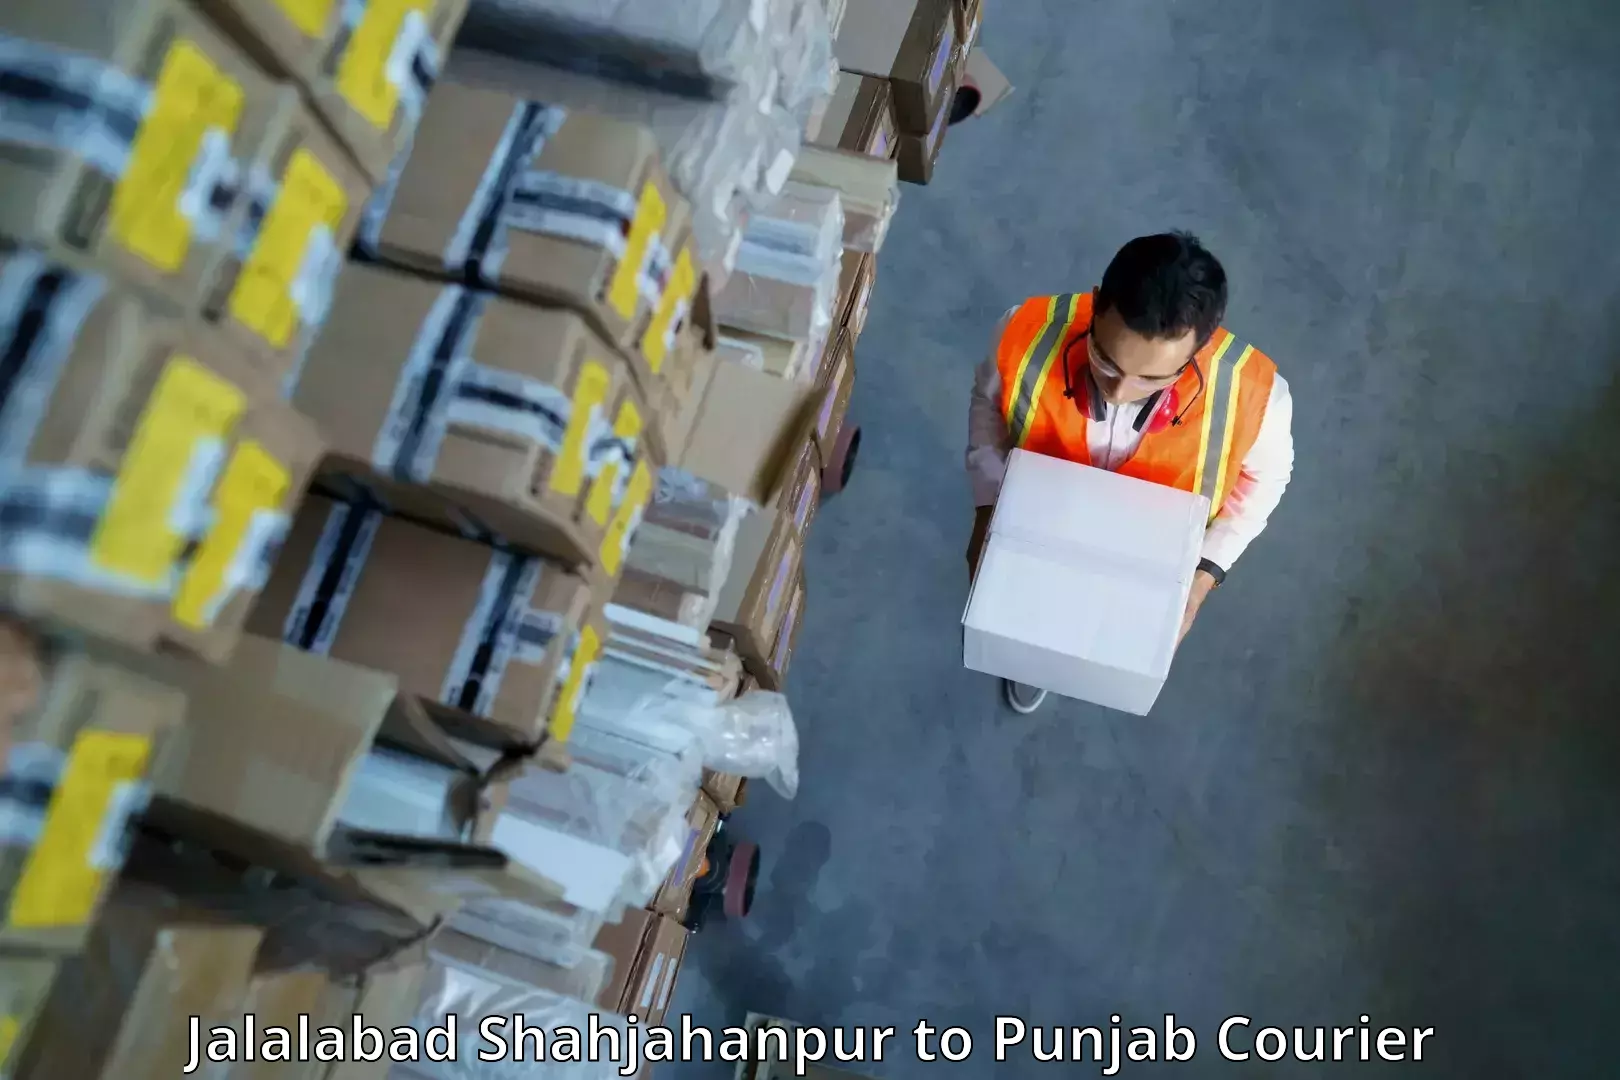 Doorstep delivery service Jalalabad Shahjahanpur to Talwara